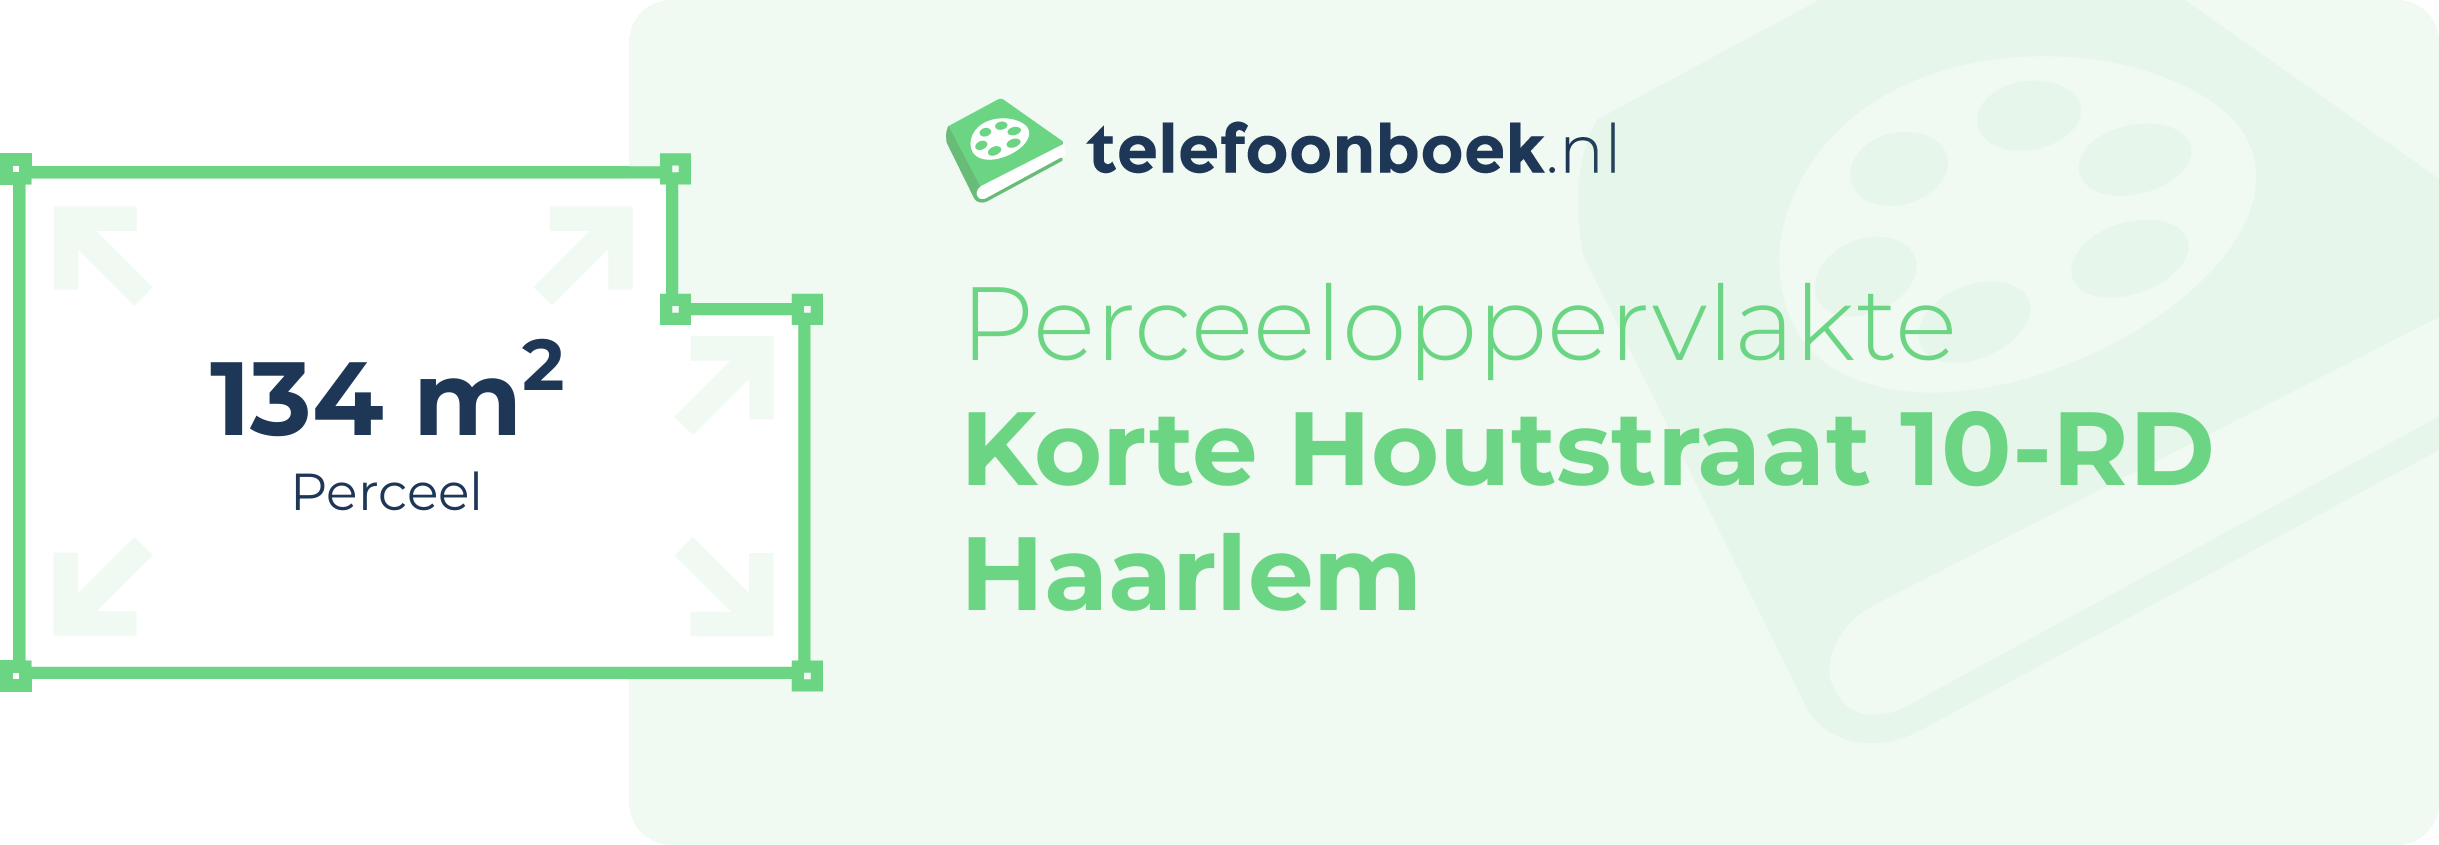 Perceeloppervlakte Korte Houtstraat 10-RD Haarlem